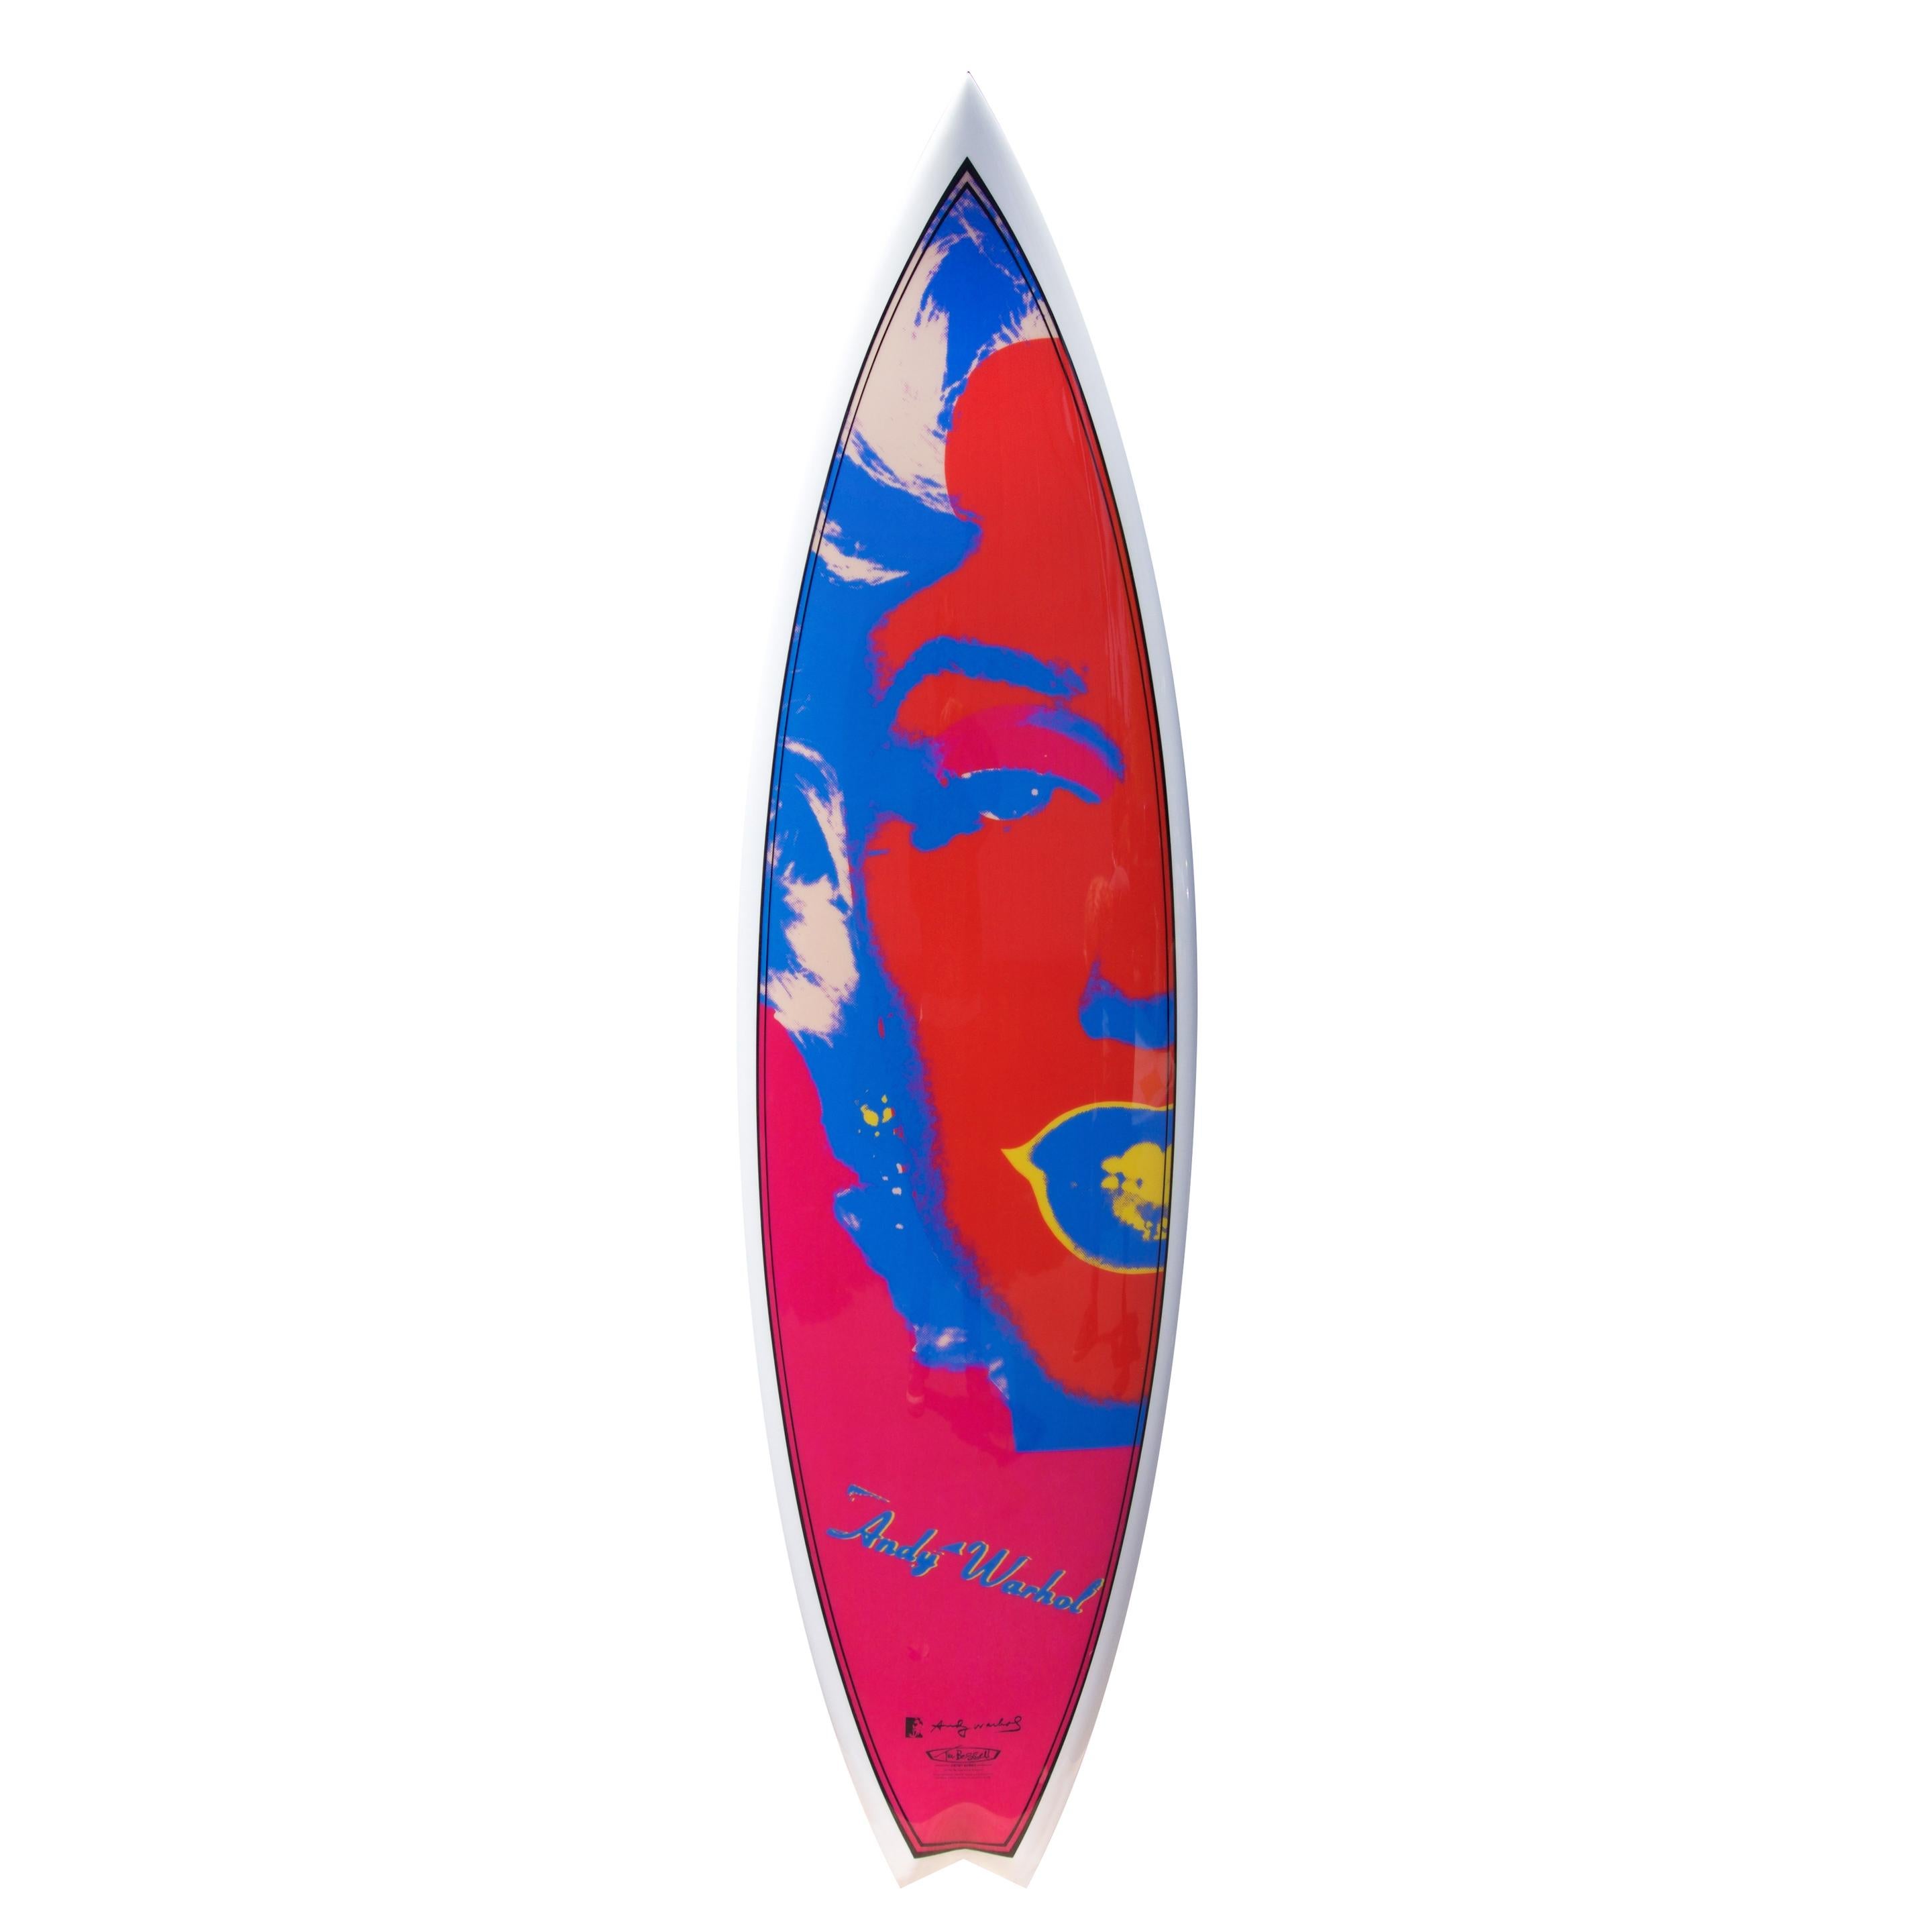 Marilyn, tabla de surf roja/blanca (after) Andy Warhol